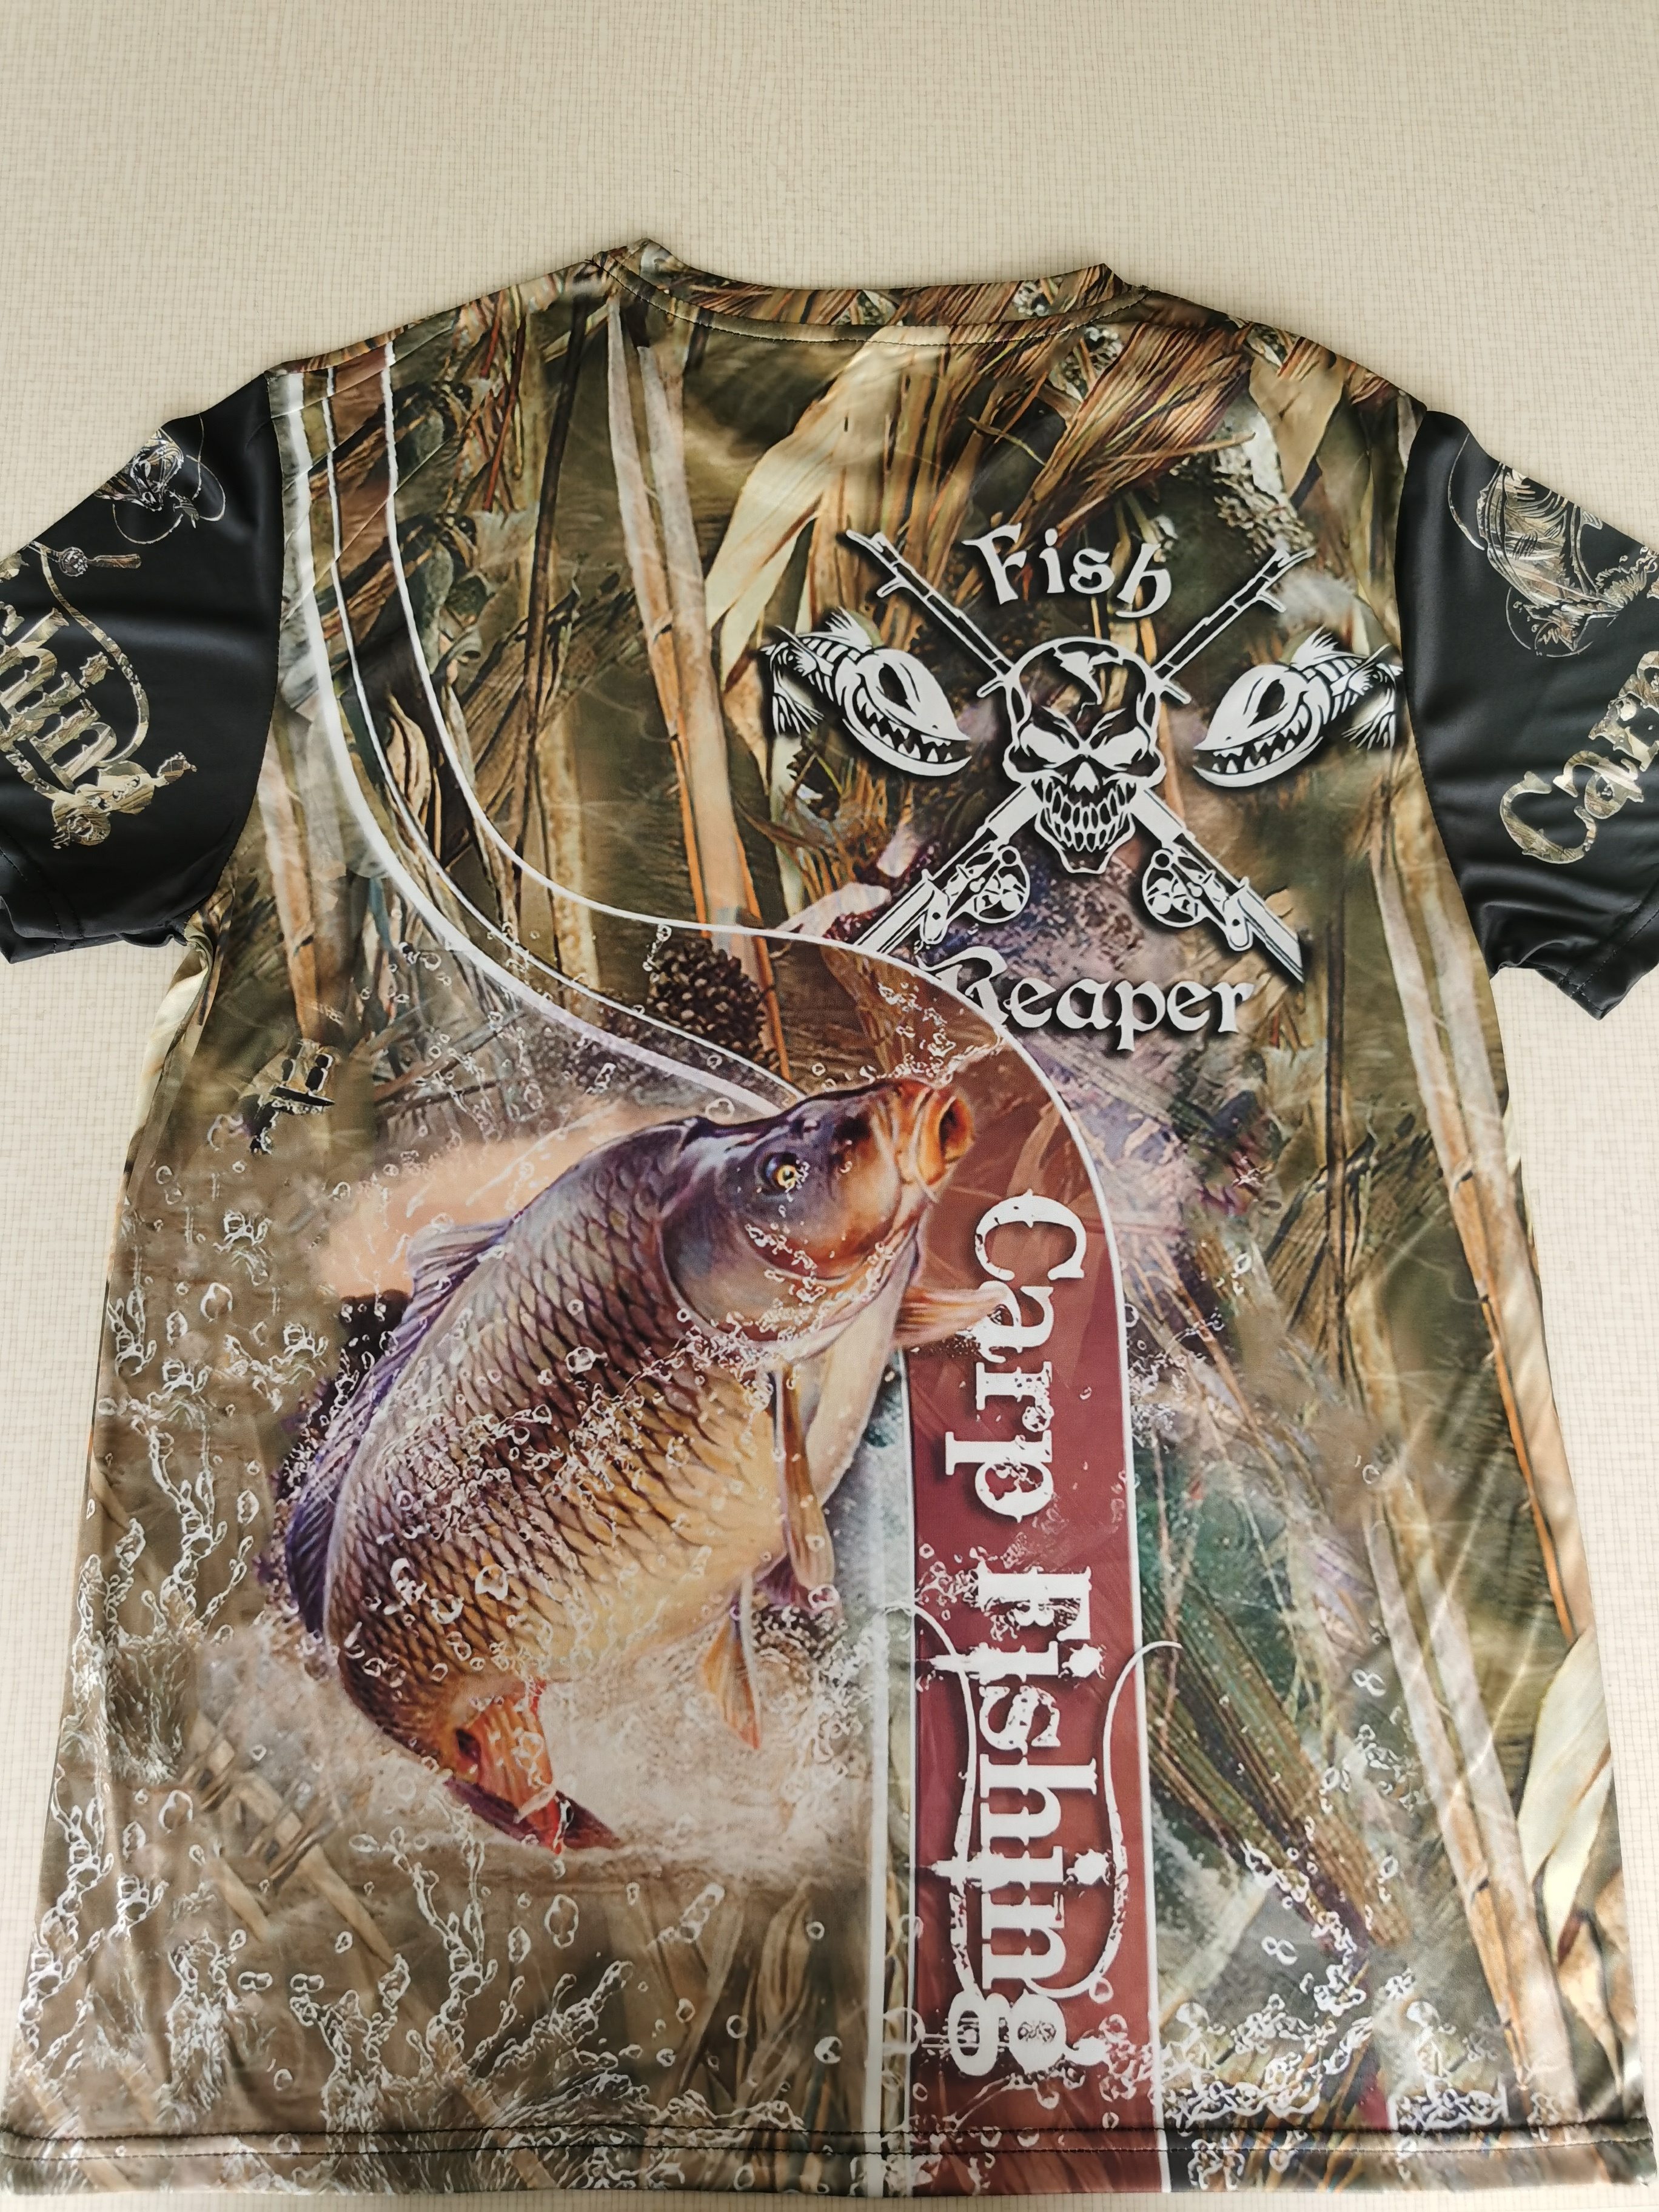 Carp fishing T shirt with camouflage heat press vinyl logo ideal gift for  fisherman - LARGE CARP FISH